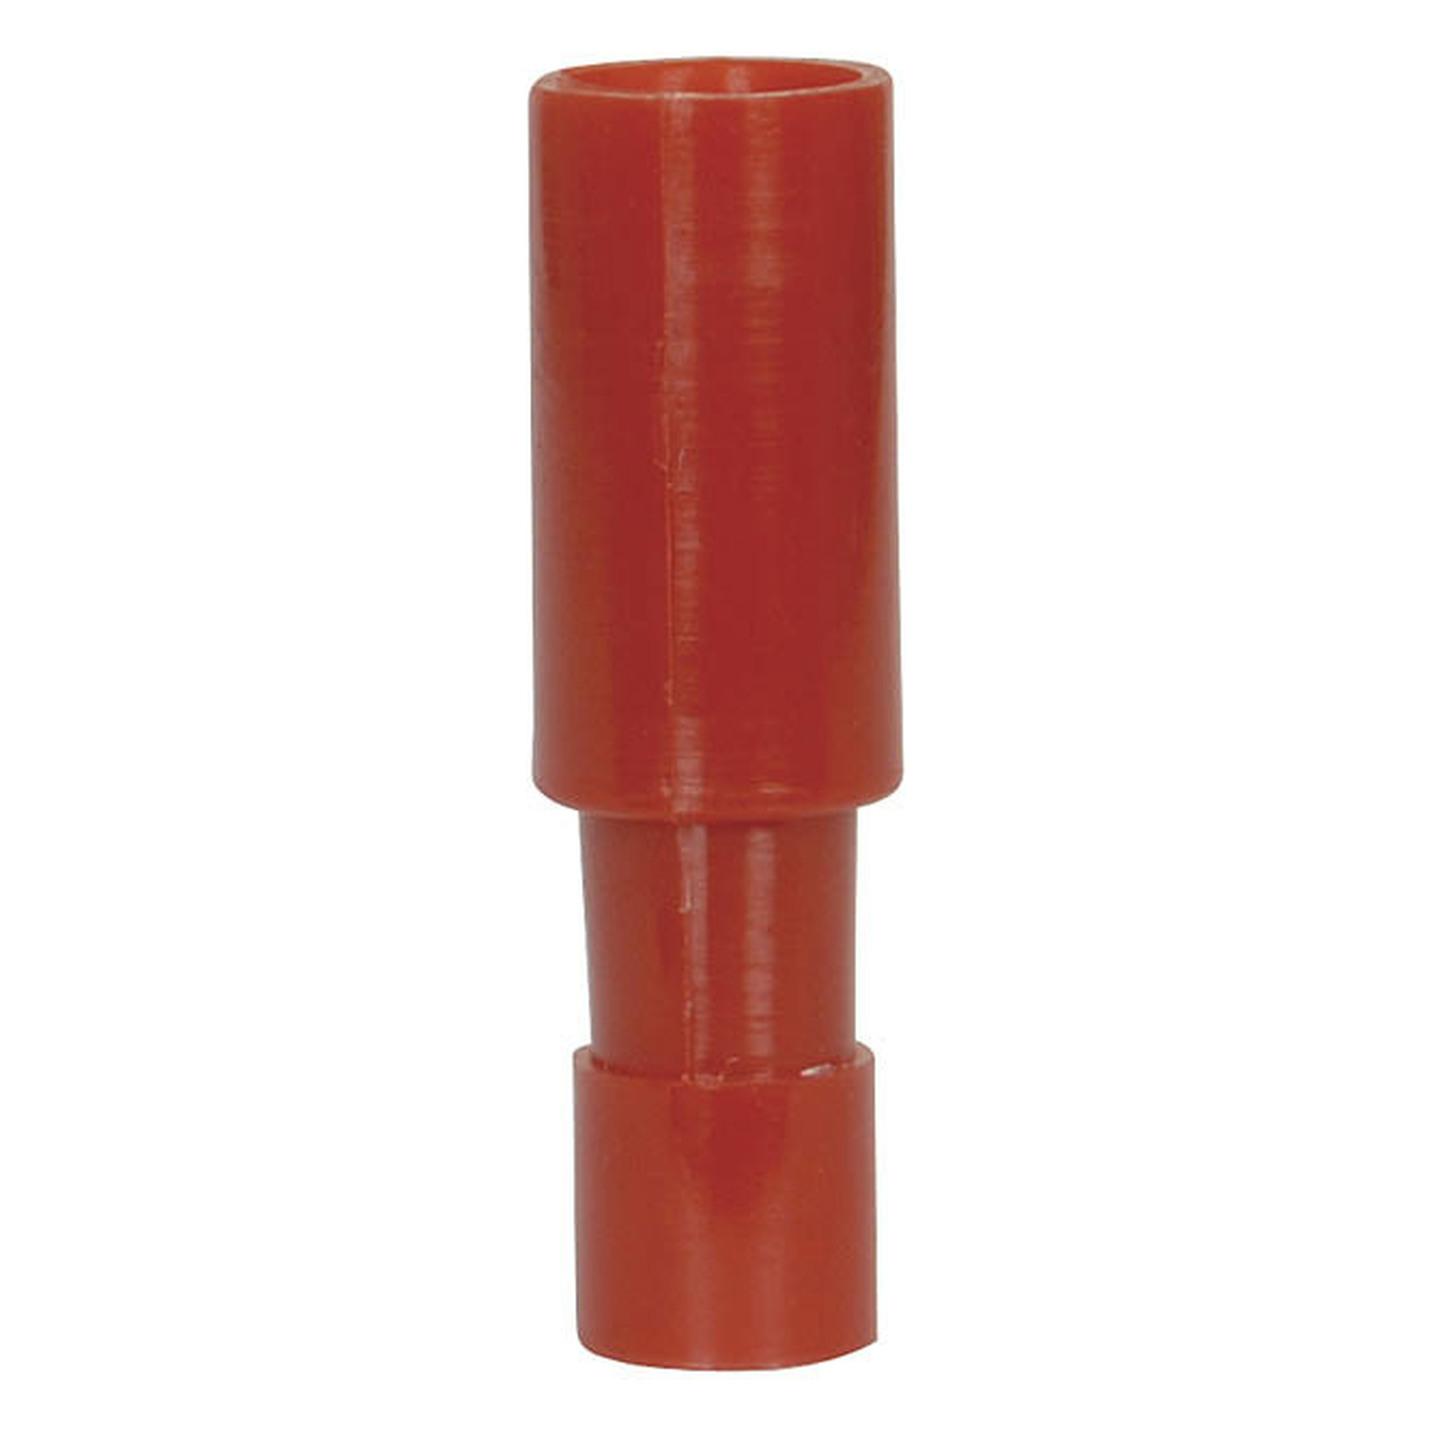 4mm Bullet Female - Red - Pack of 8